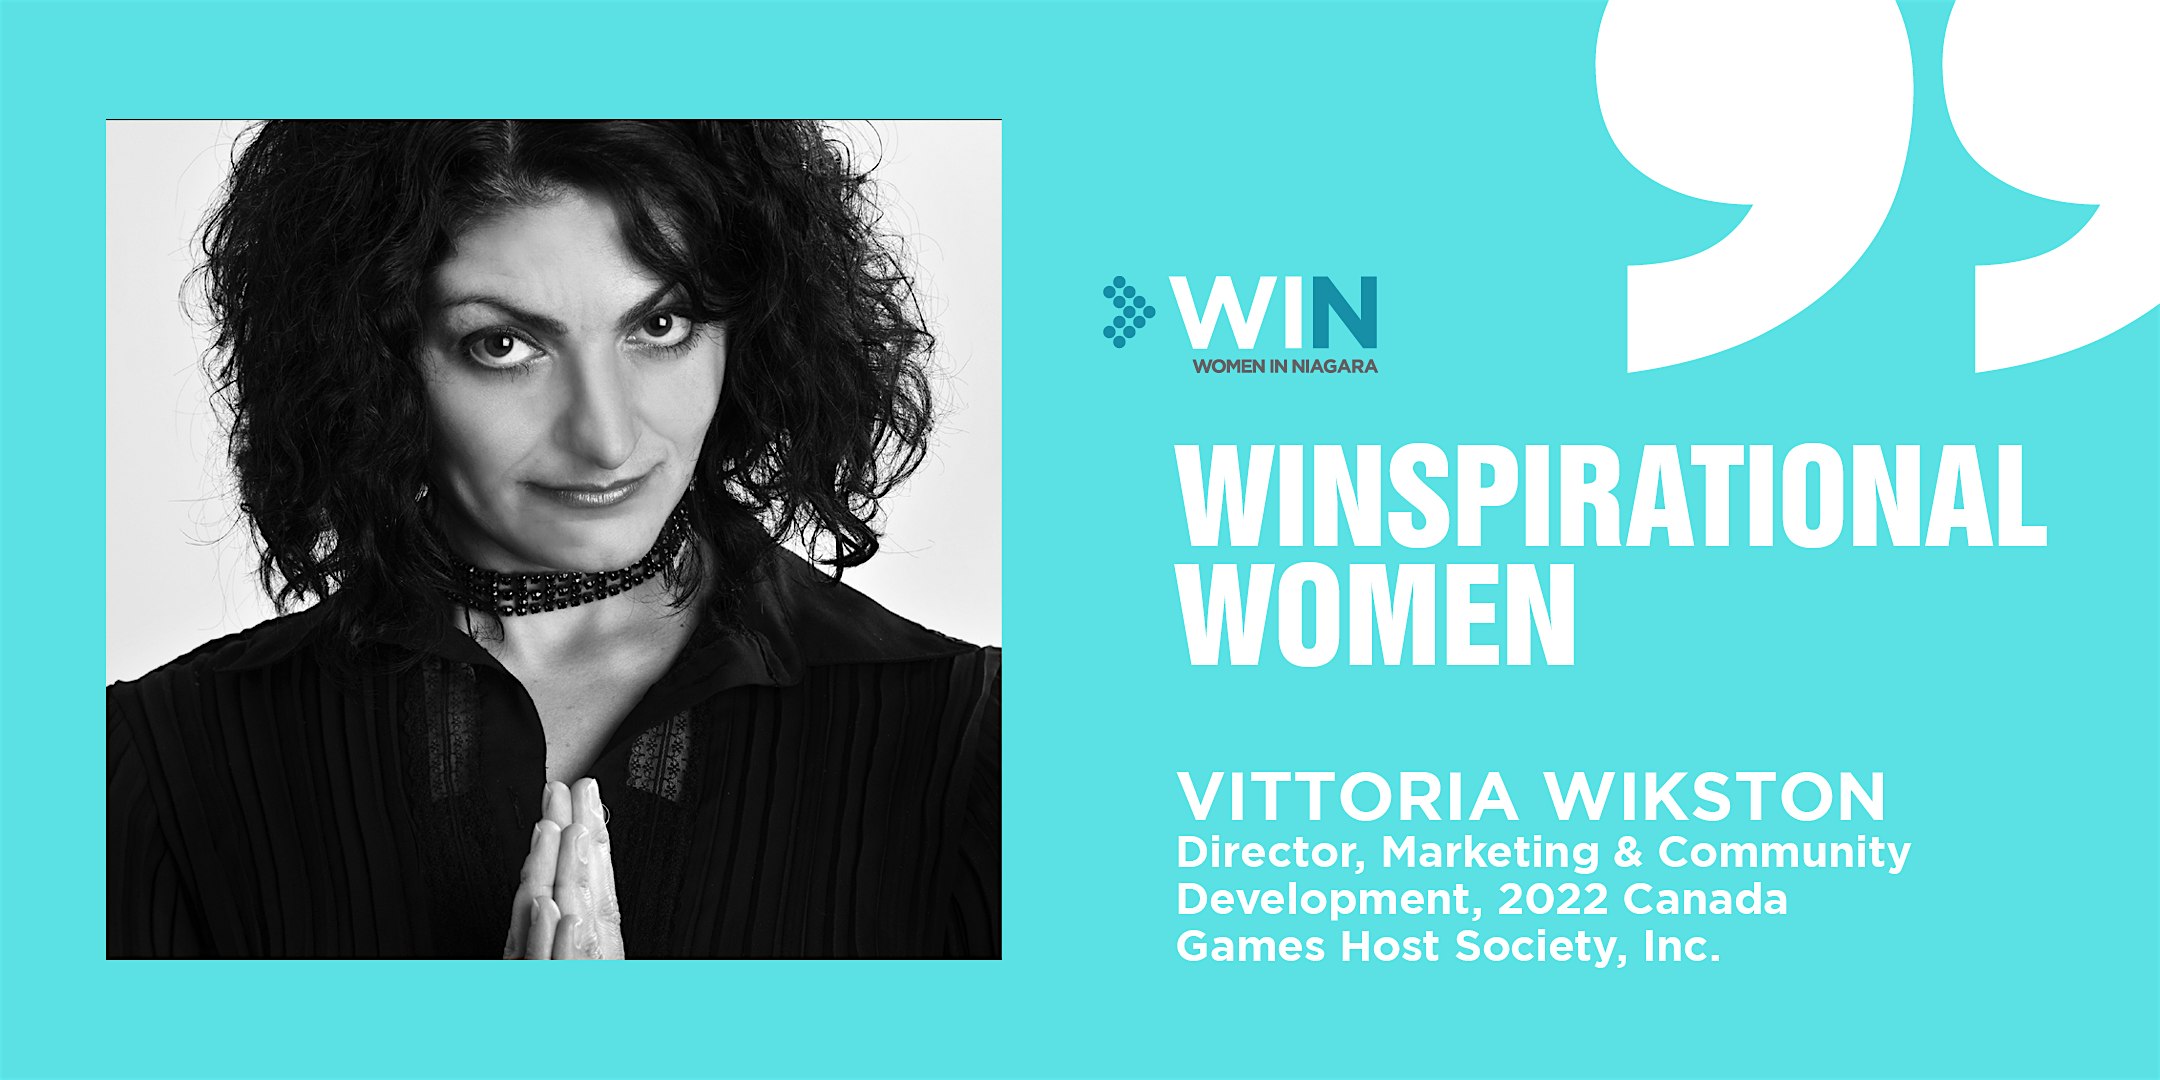 WINspirational Women: Vittoria Wikston